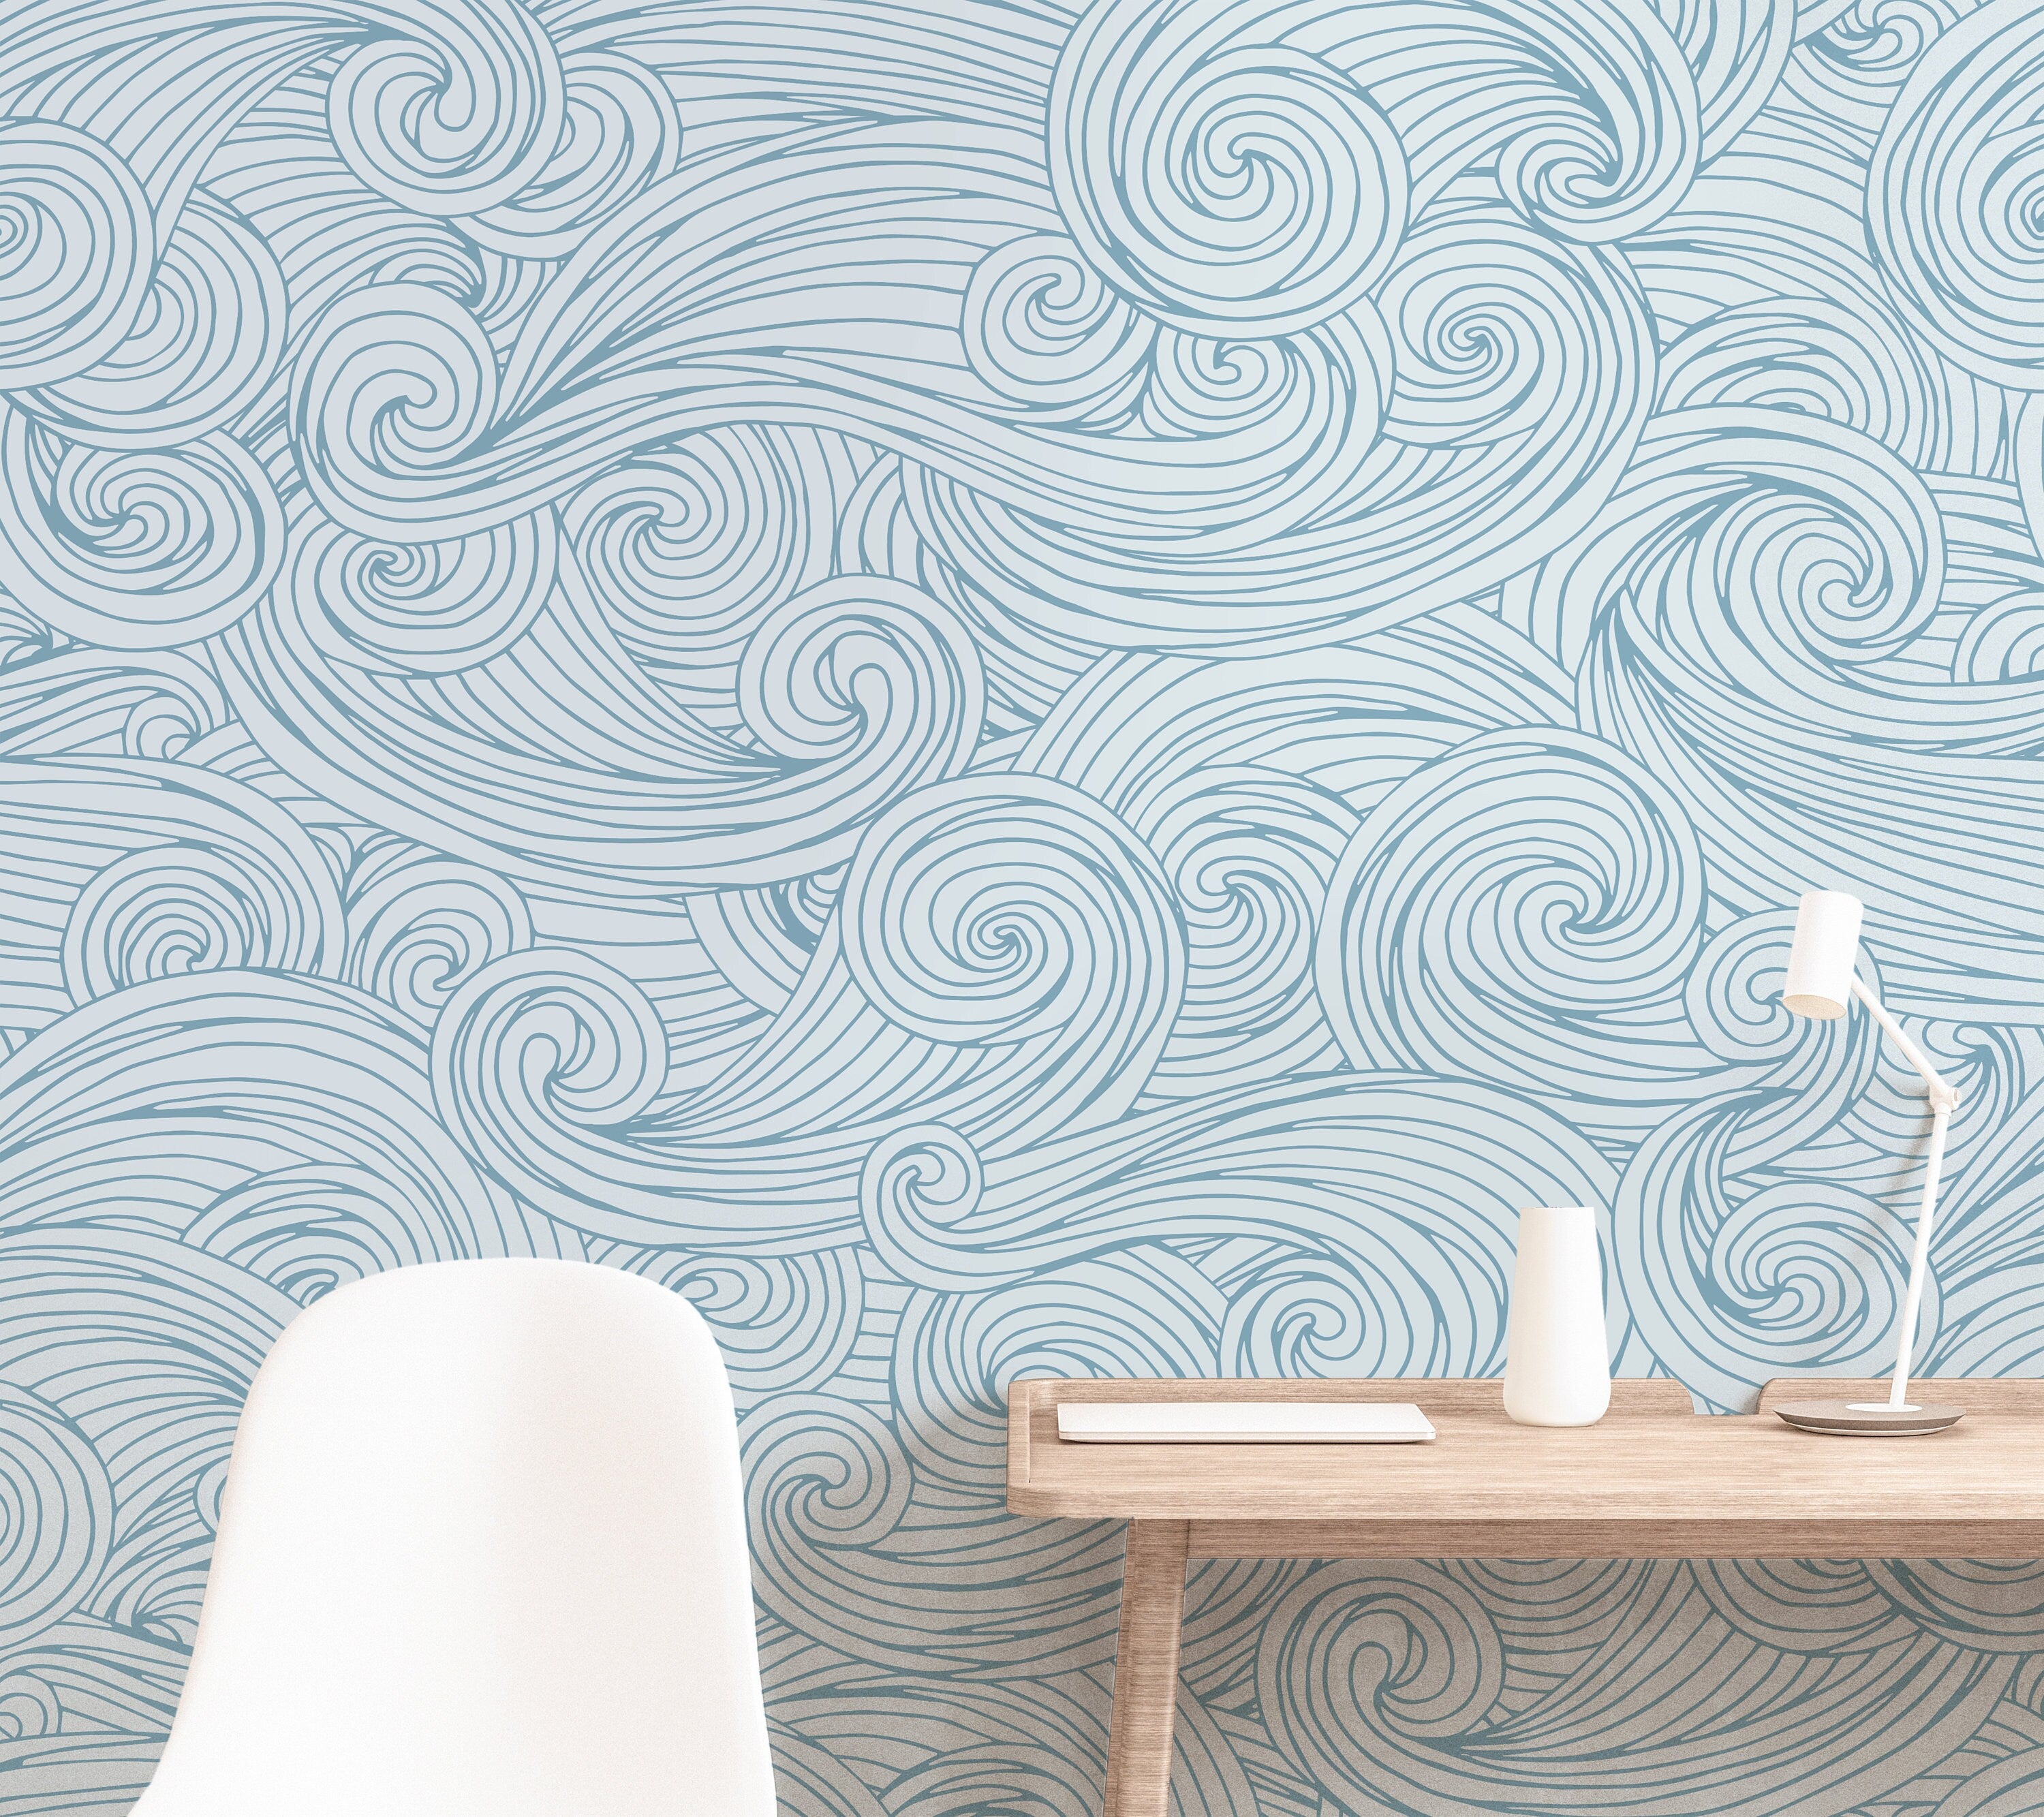 Wallpaper Peel and Stick Wallpaper Blue Crashing Ocean Waves Removable Wallpaper Wall Decor Home Decor Wall Art Room Decor 3834 - JamesAndColors